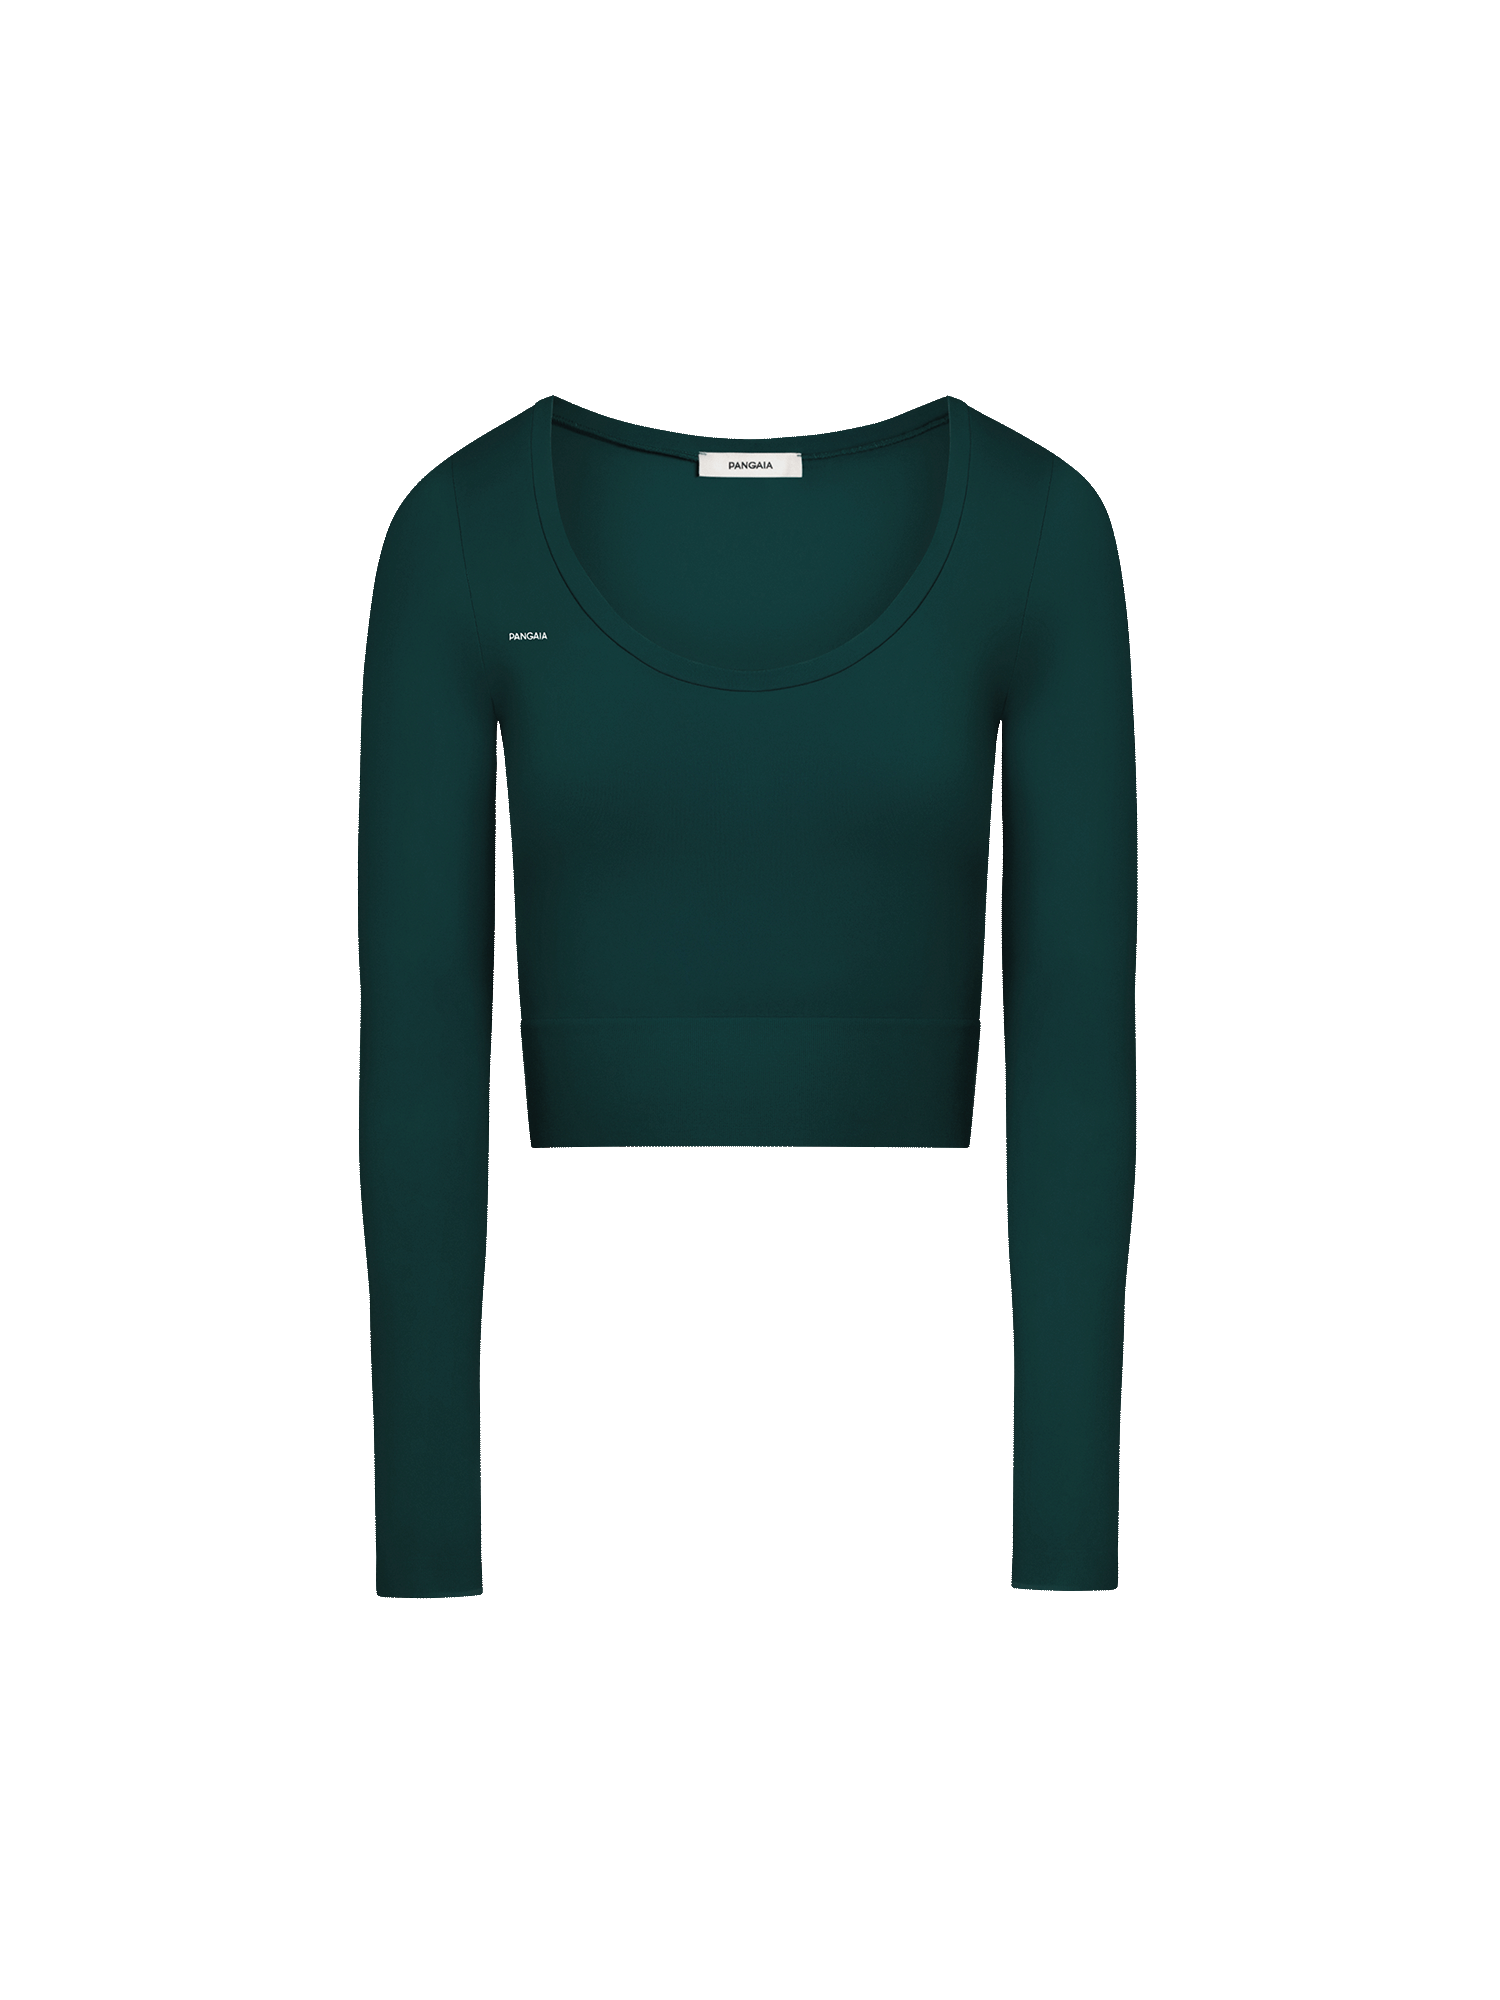 Activewear-3-0-Long-Sleeve-Crop-Top-Foliage-Green-packshot-3